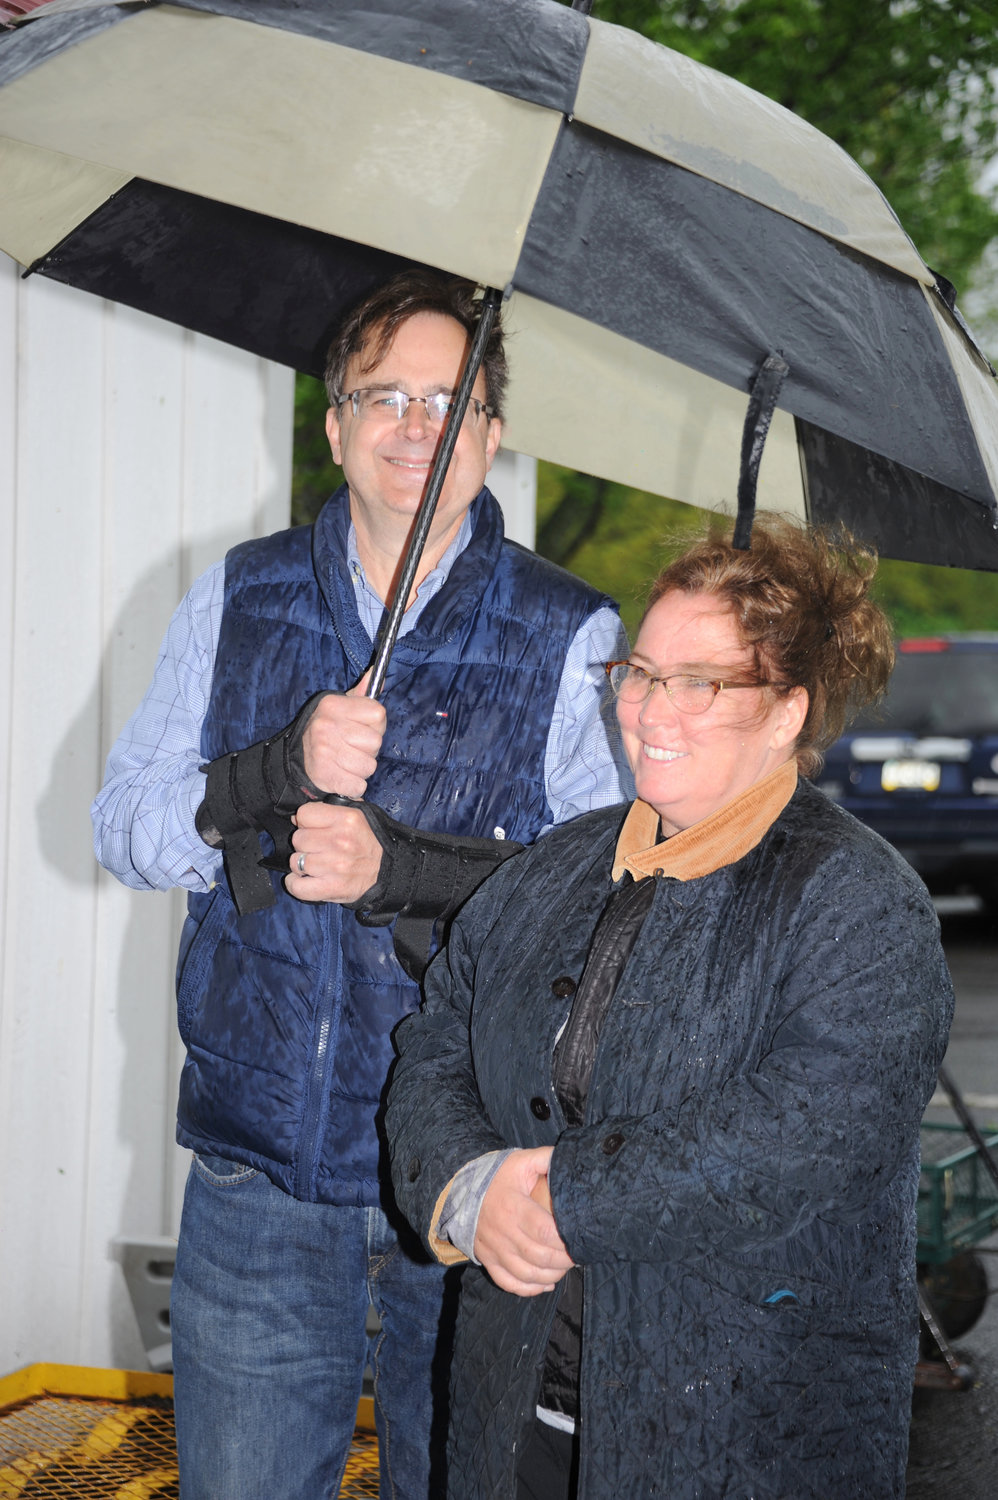 Ed Sueta and Laura Kearny Sueta brave the rain and winds.